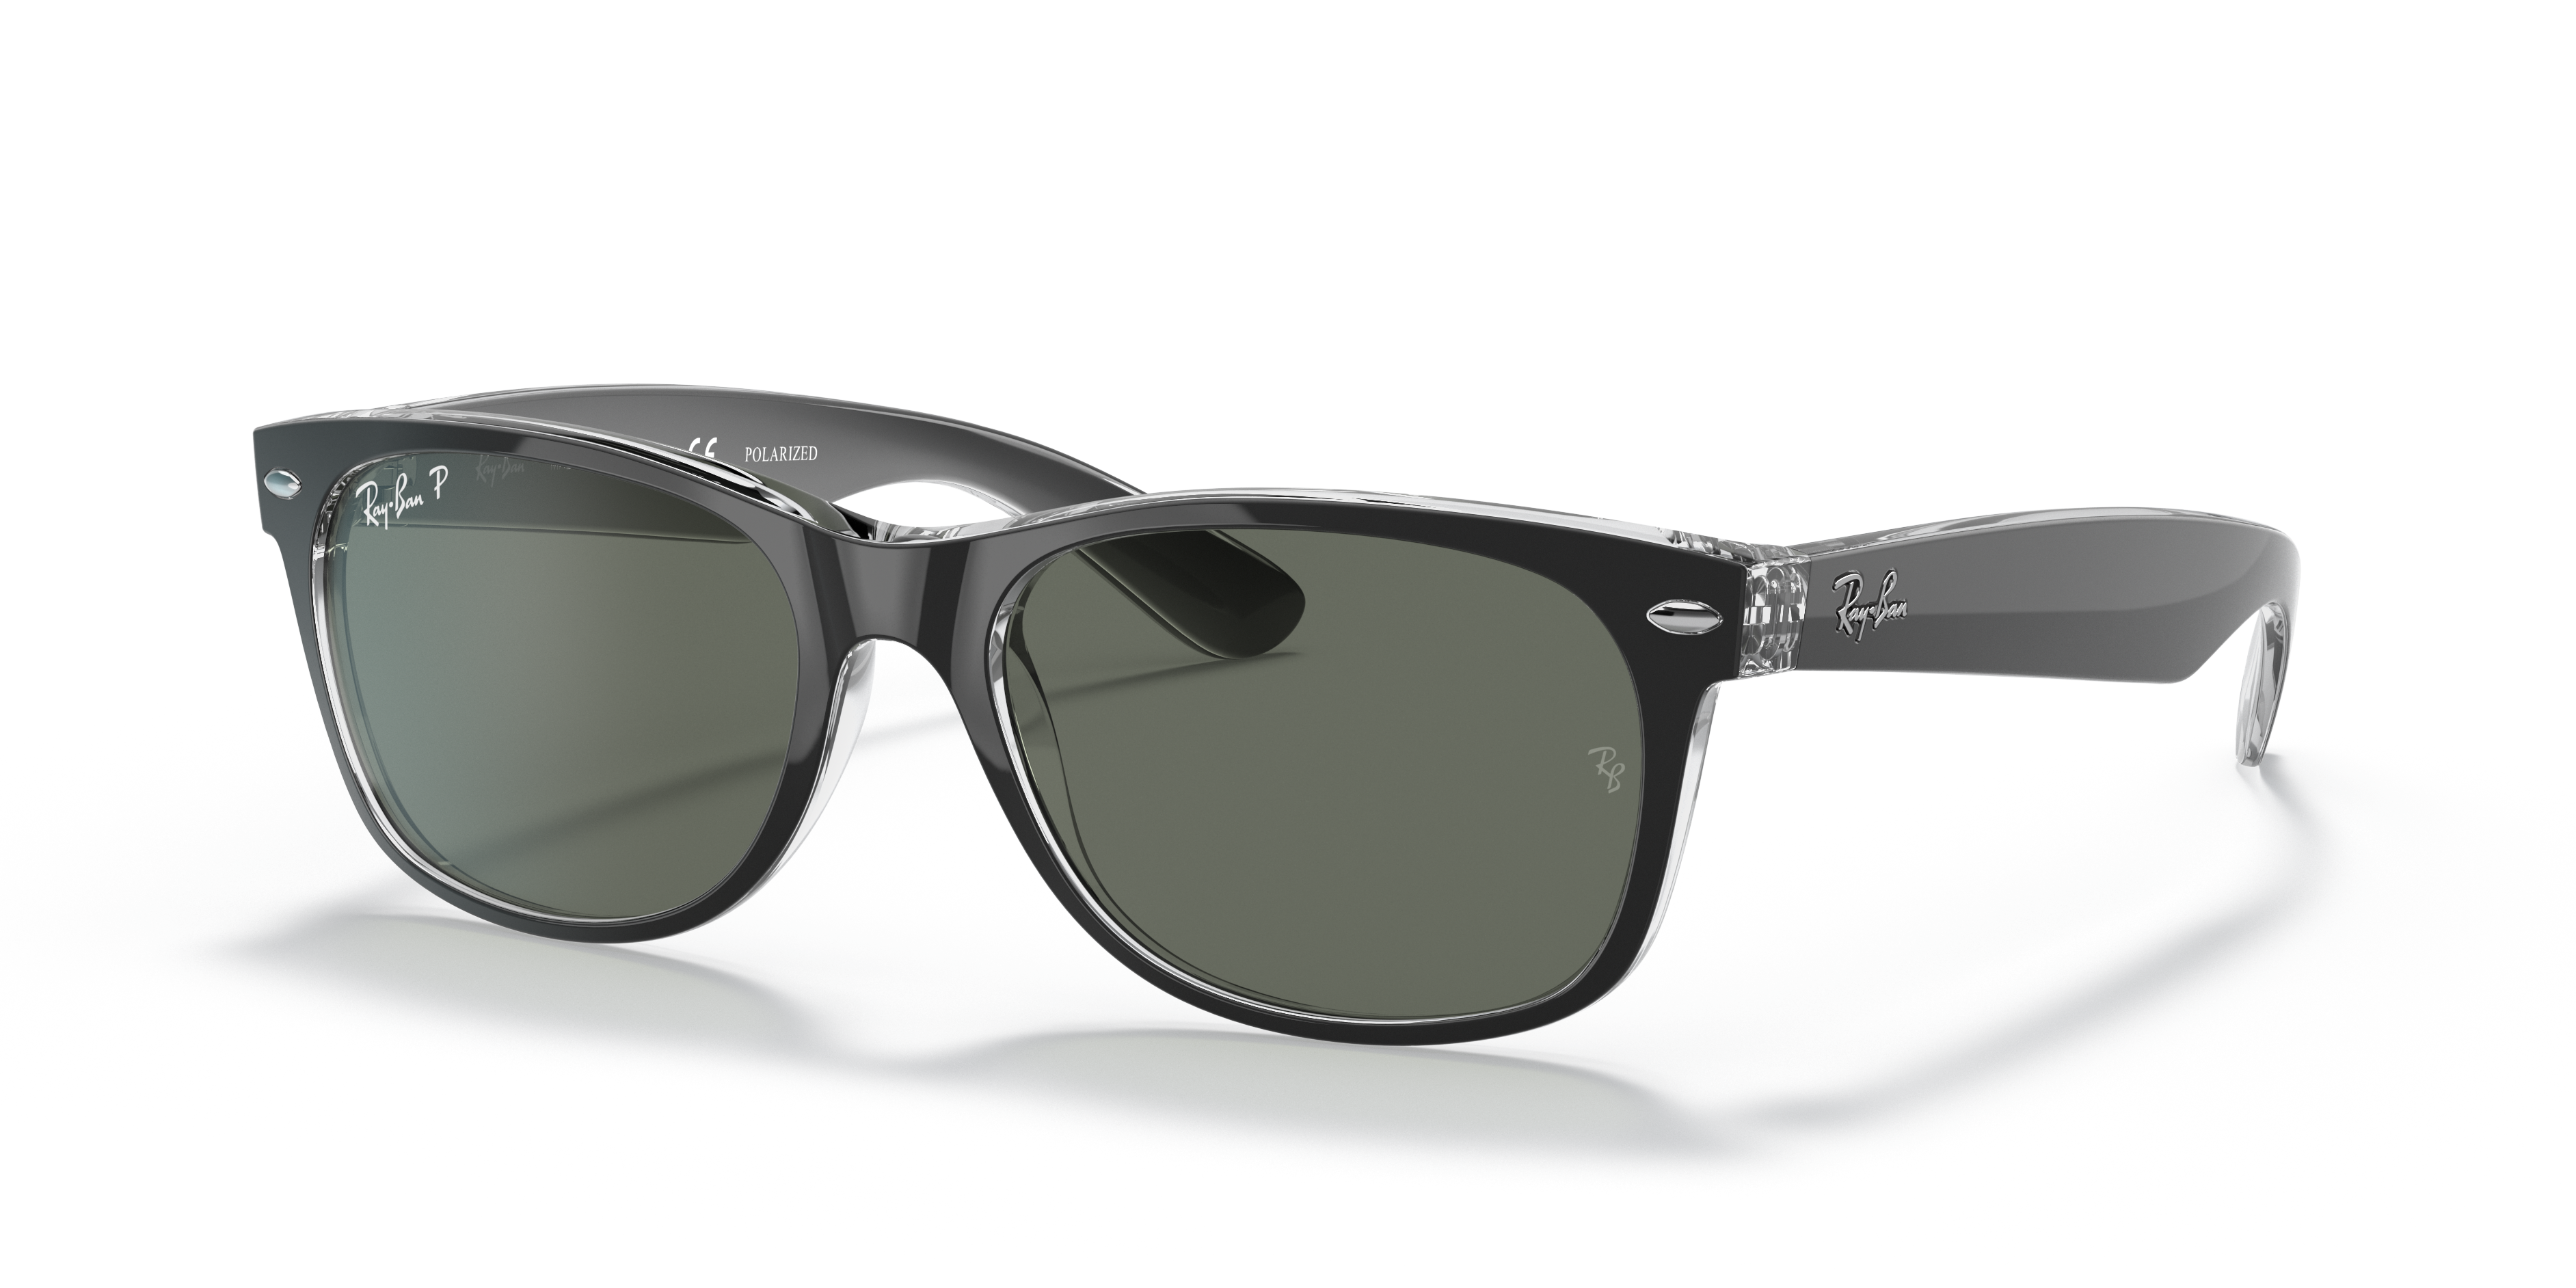 NEW WAYFARER CLASSIC Sunglasses in Tortoise and Green - RB2132